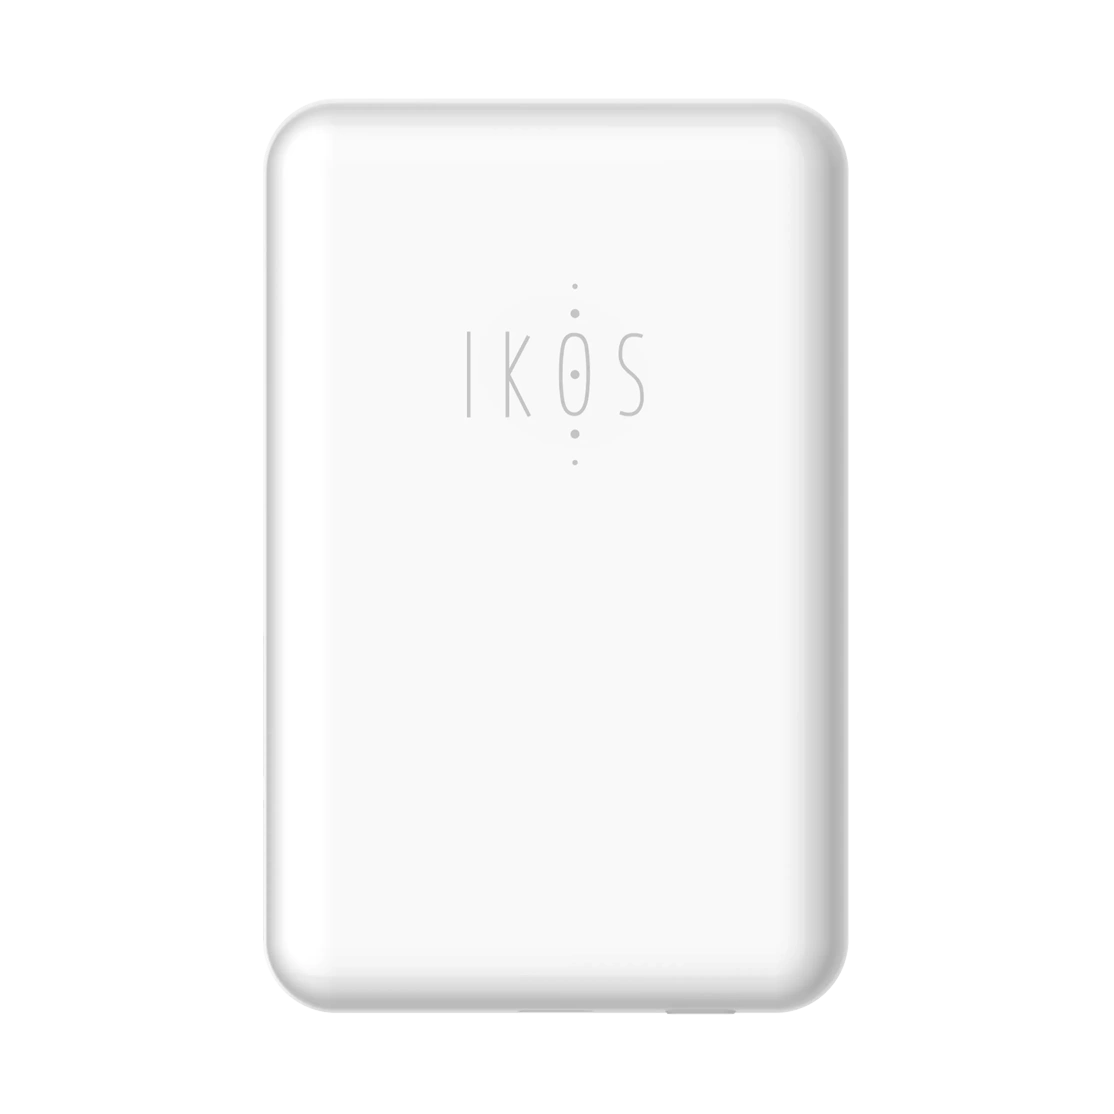 Ikos Wireless Dual Sim Adapter for iPhone K6